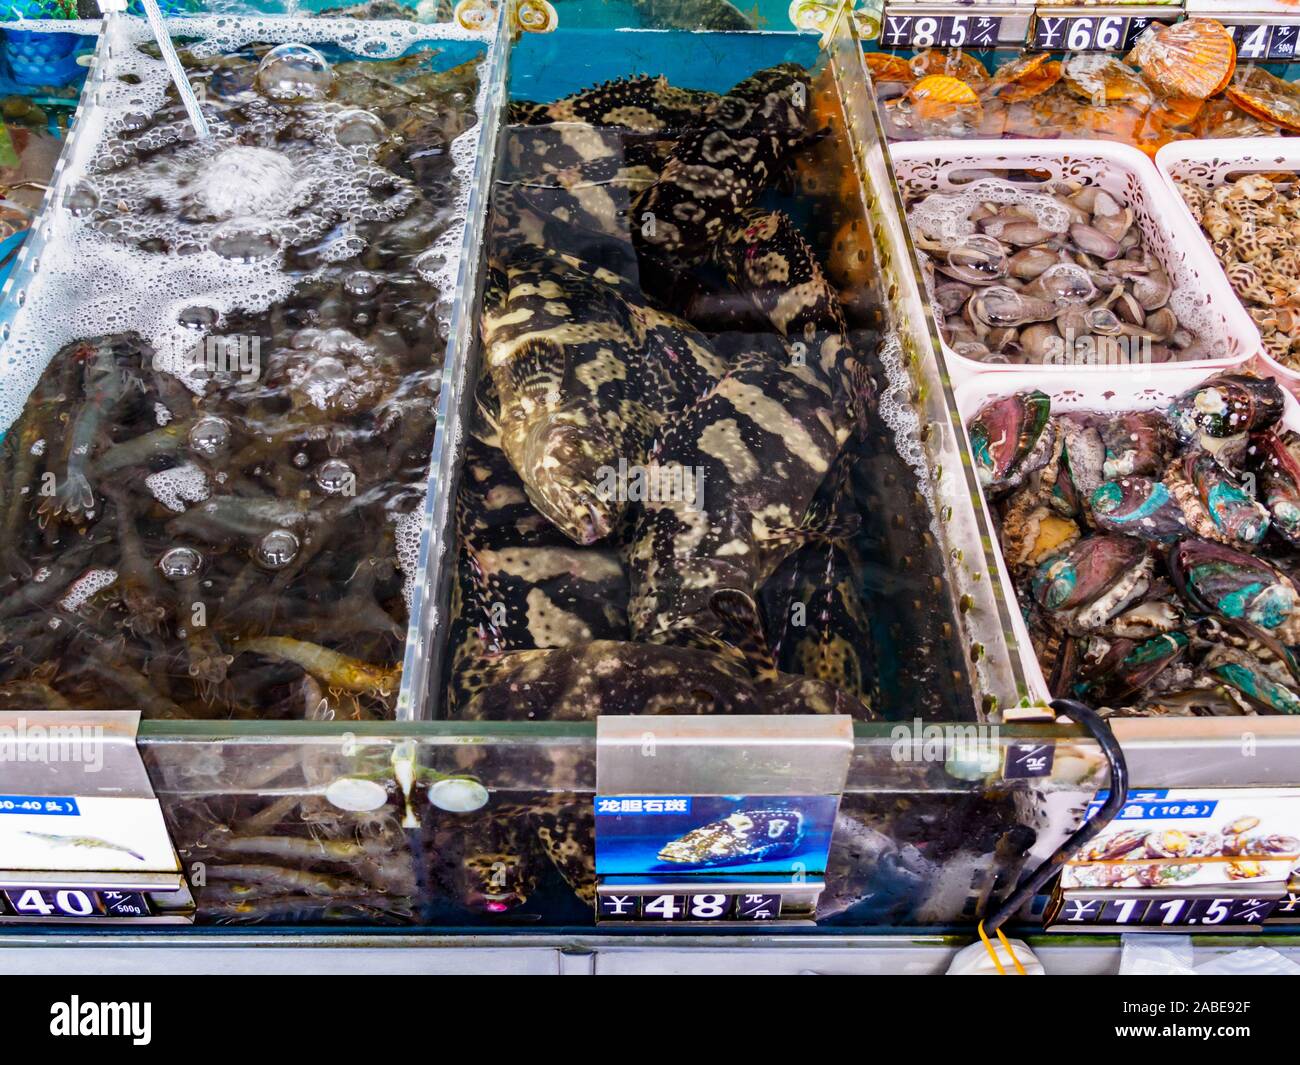 HAINAN, CHINA - 3 MAR 2019 – Tanks of fresh live seafood (fish; prawns, shellfish) for sale at a seafood wholesale and retail centre in Hainan, China Stock Photo